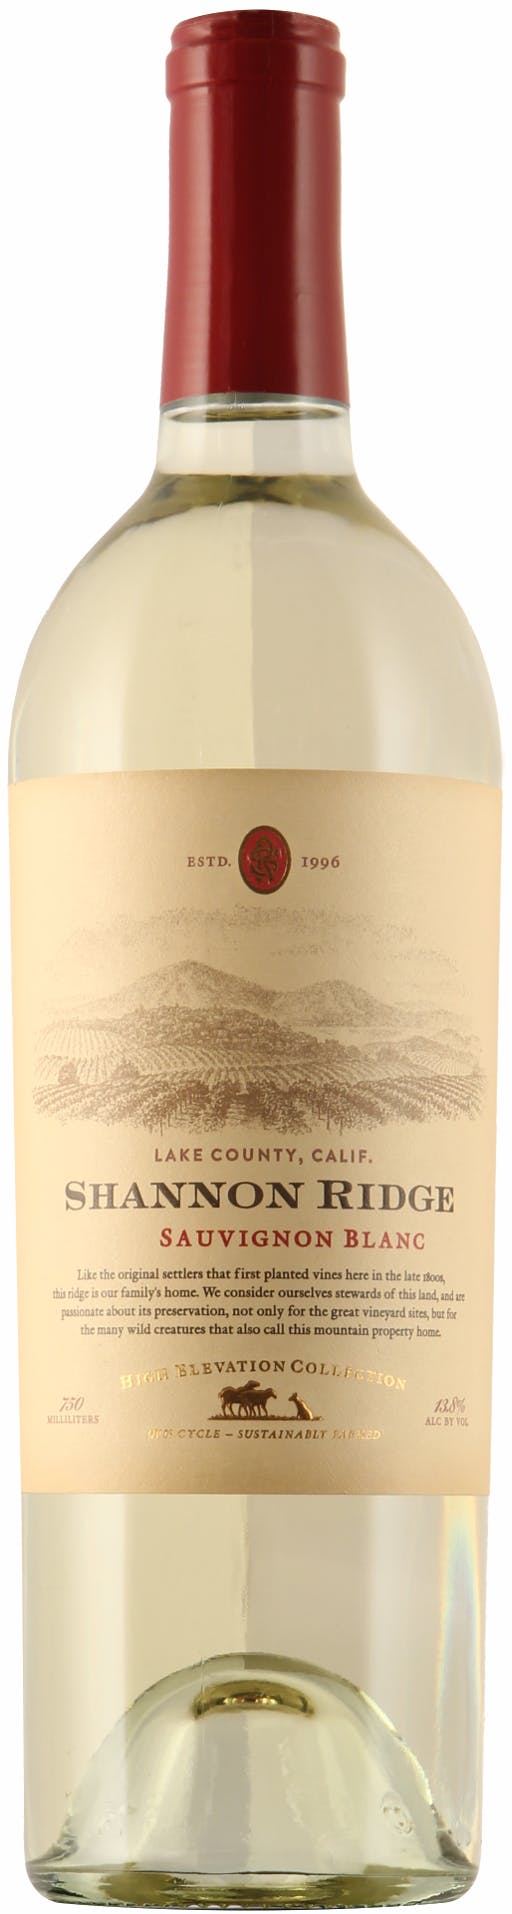 images/wine/WHITE WINE/Shannon Ridge Sauvignon Blanc.jpg